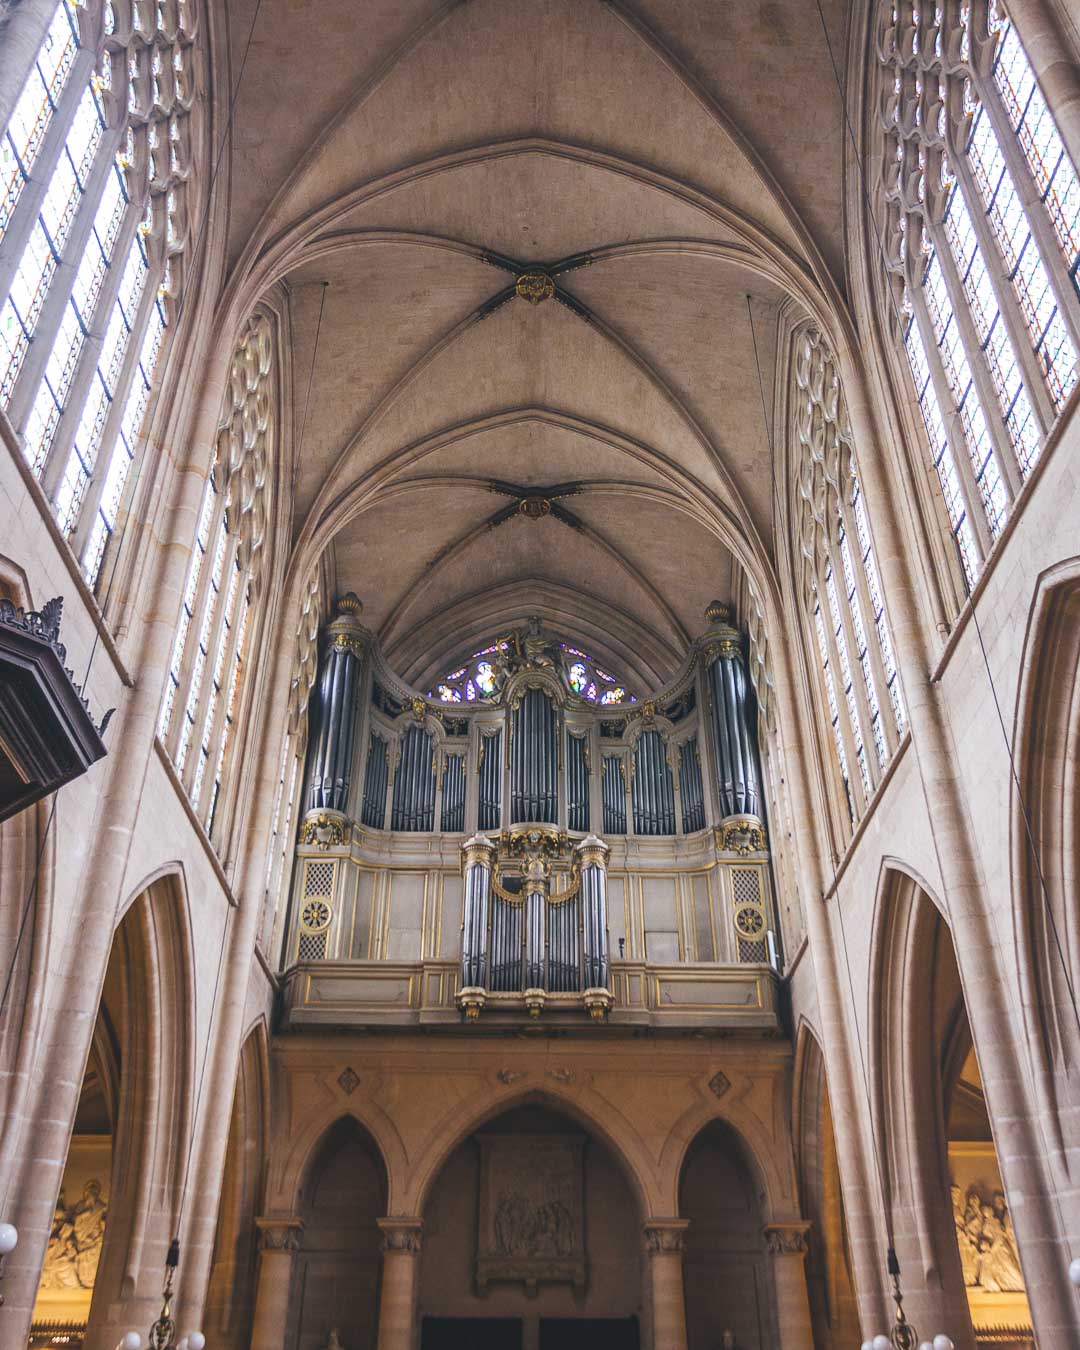 the pipe organ in saint germain l'auxerrois